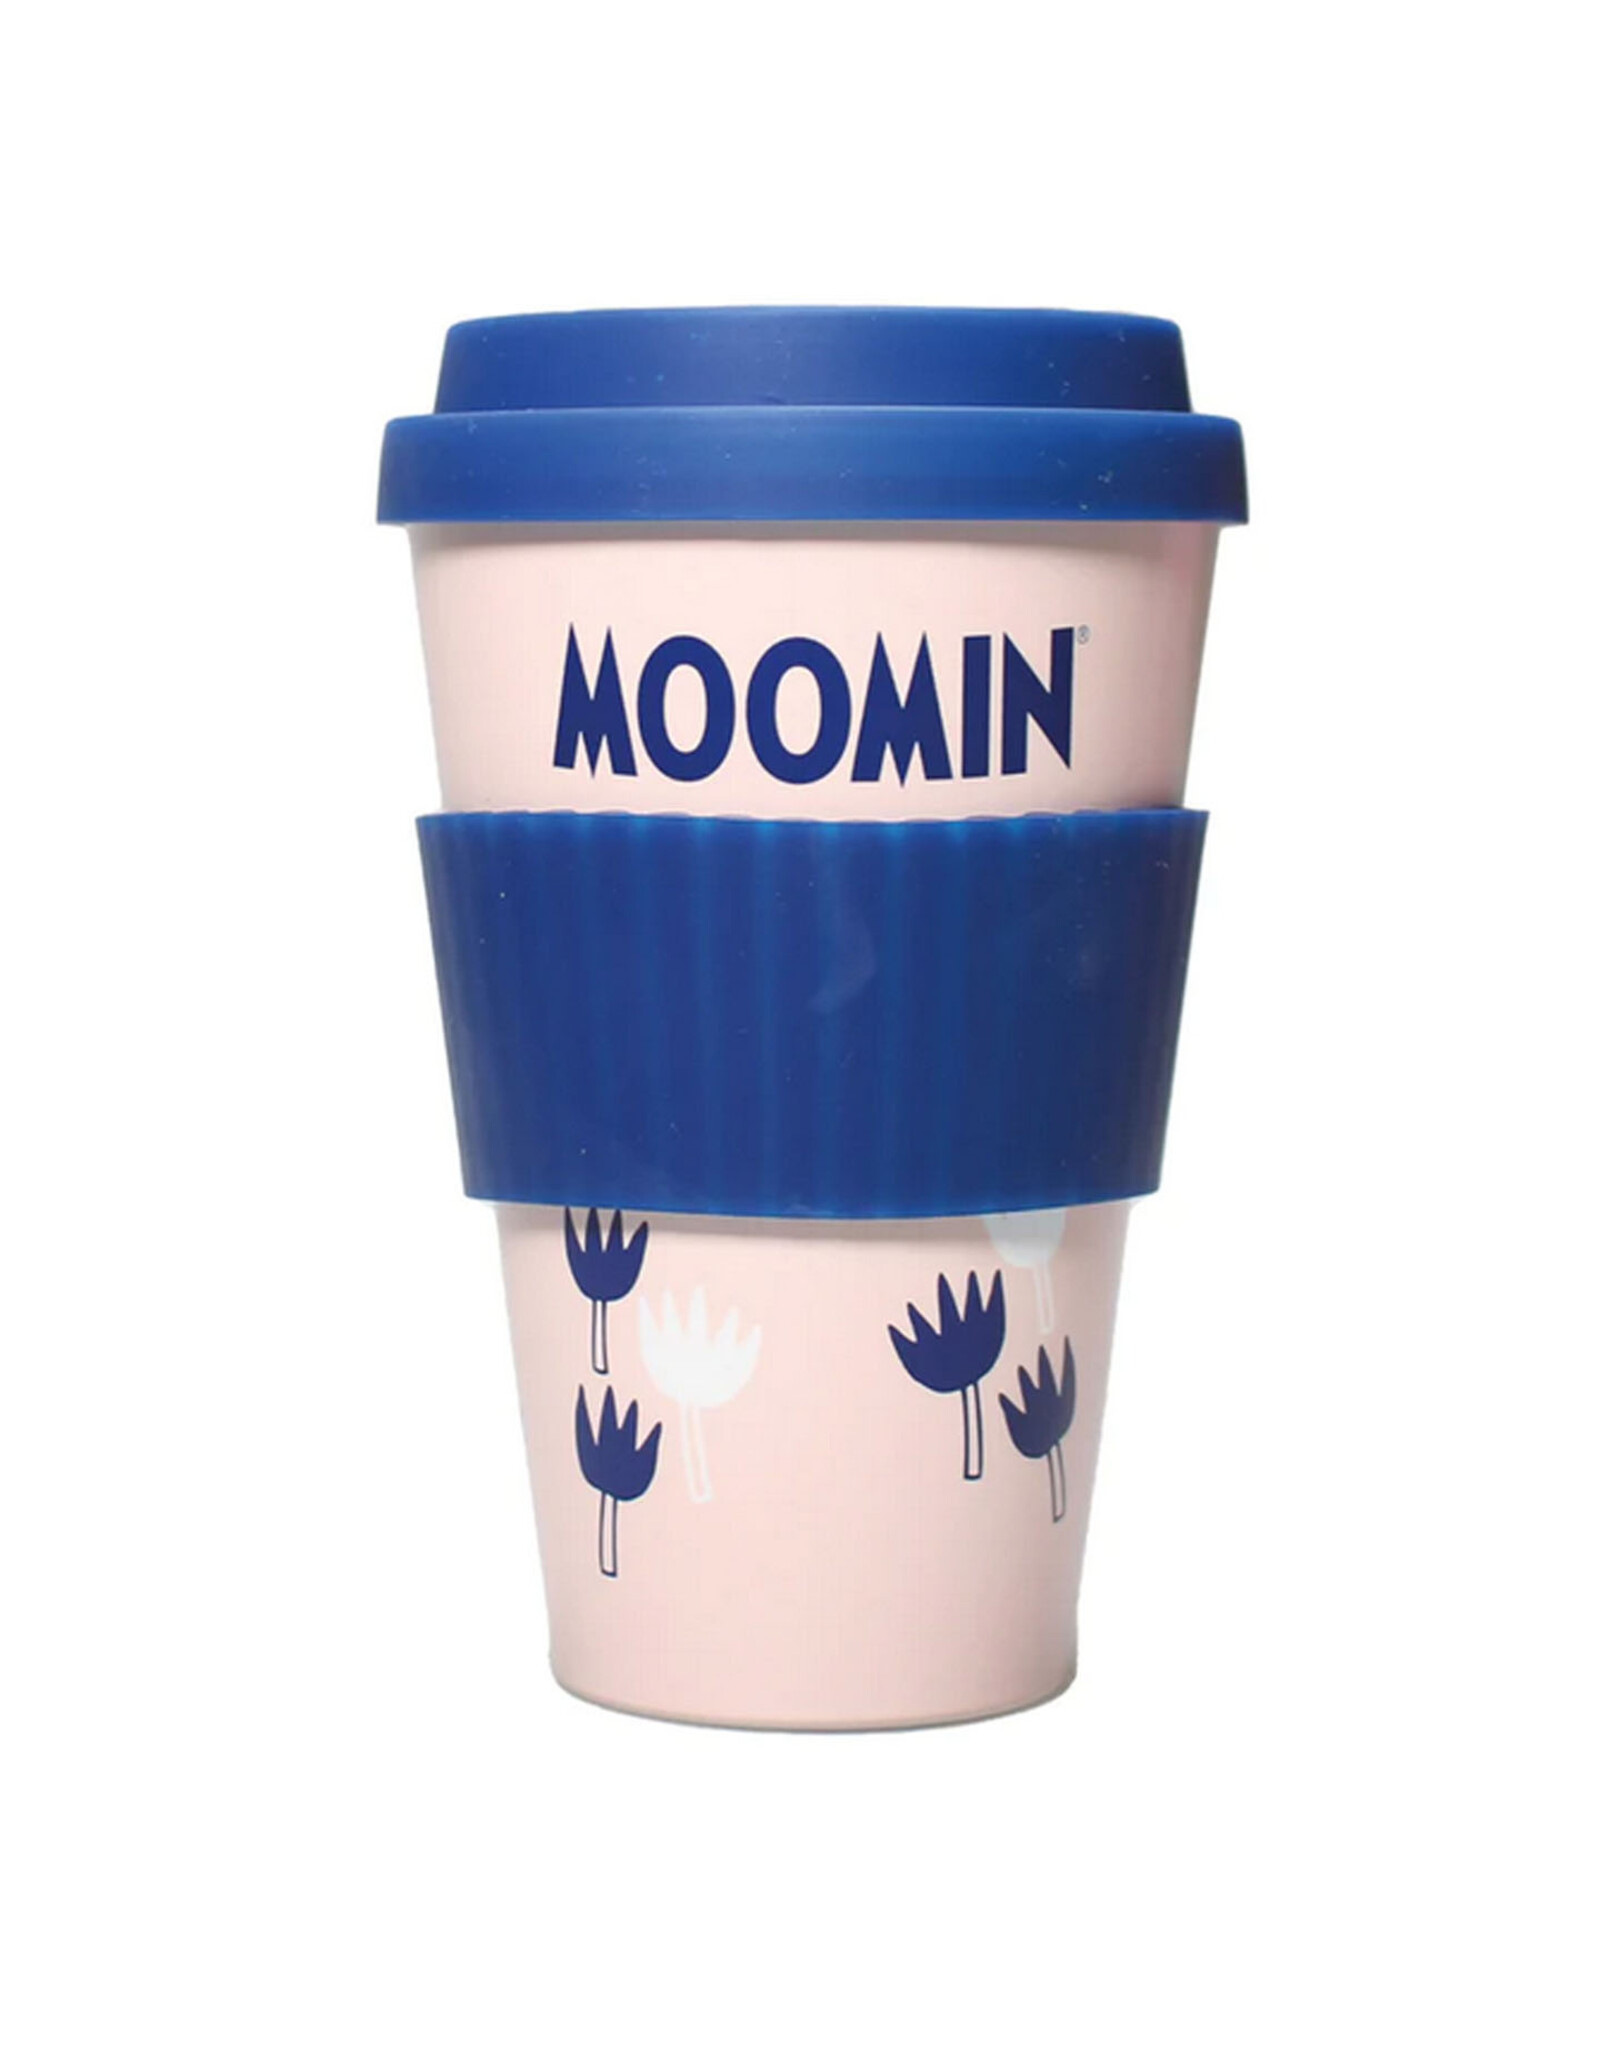 Moomin Hug Travel Mug